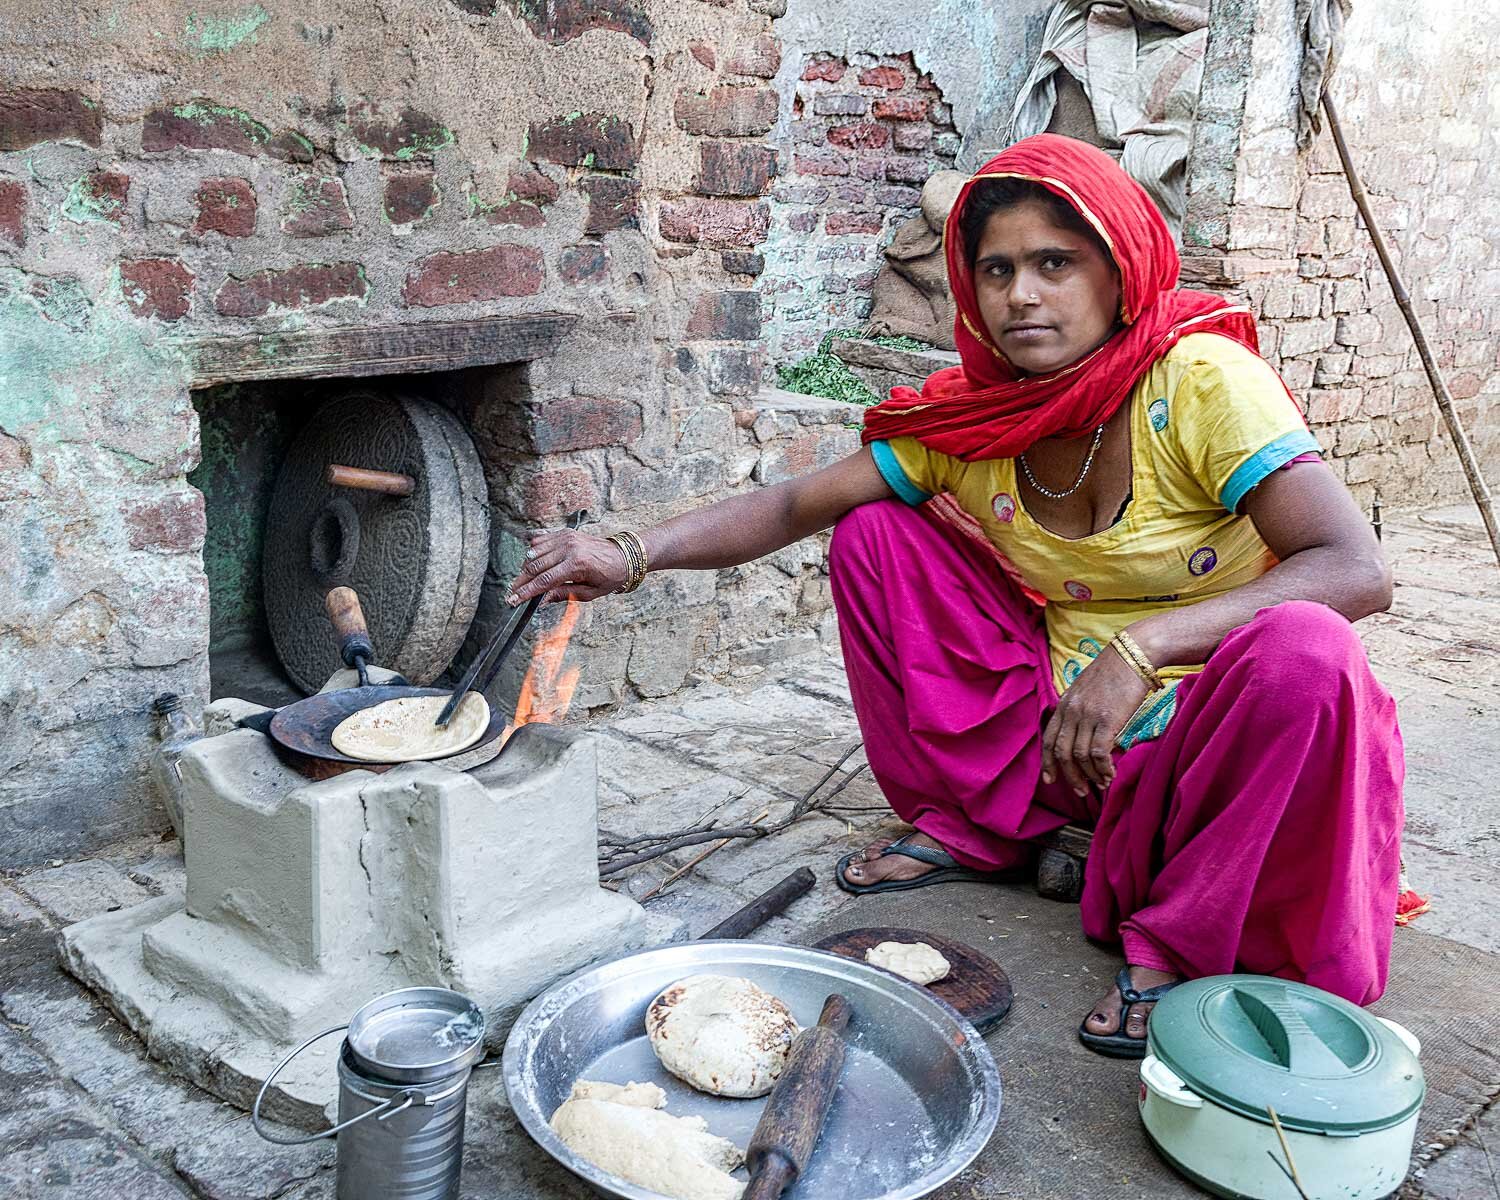 Cooking chapatis, Nandgaon, India